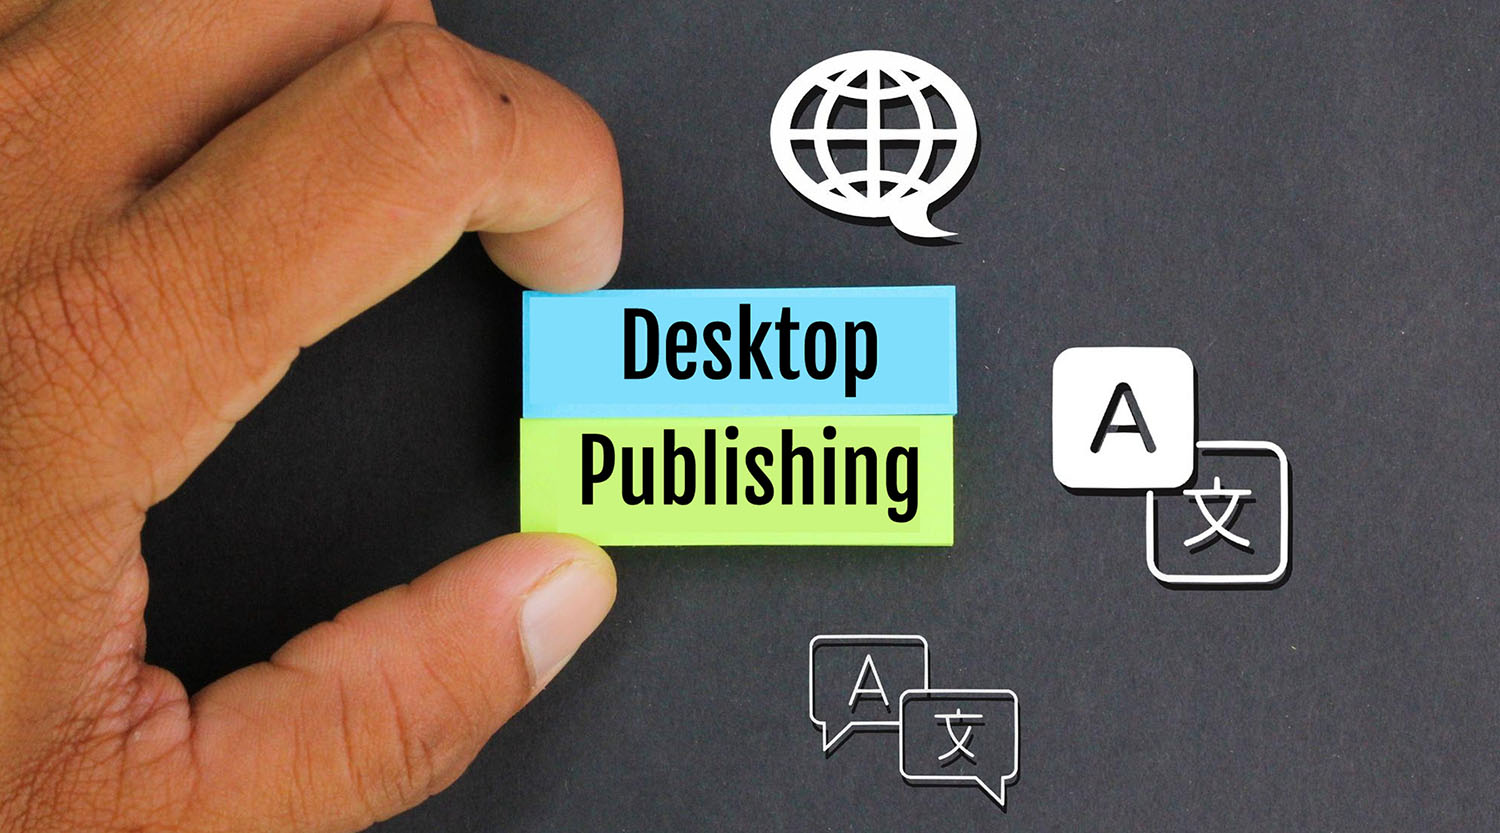 Creative Desktop Publishing Services for Print and Digital Publications by EPUBTRANS